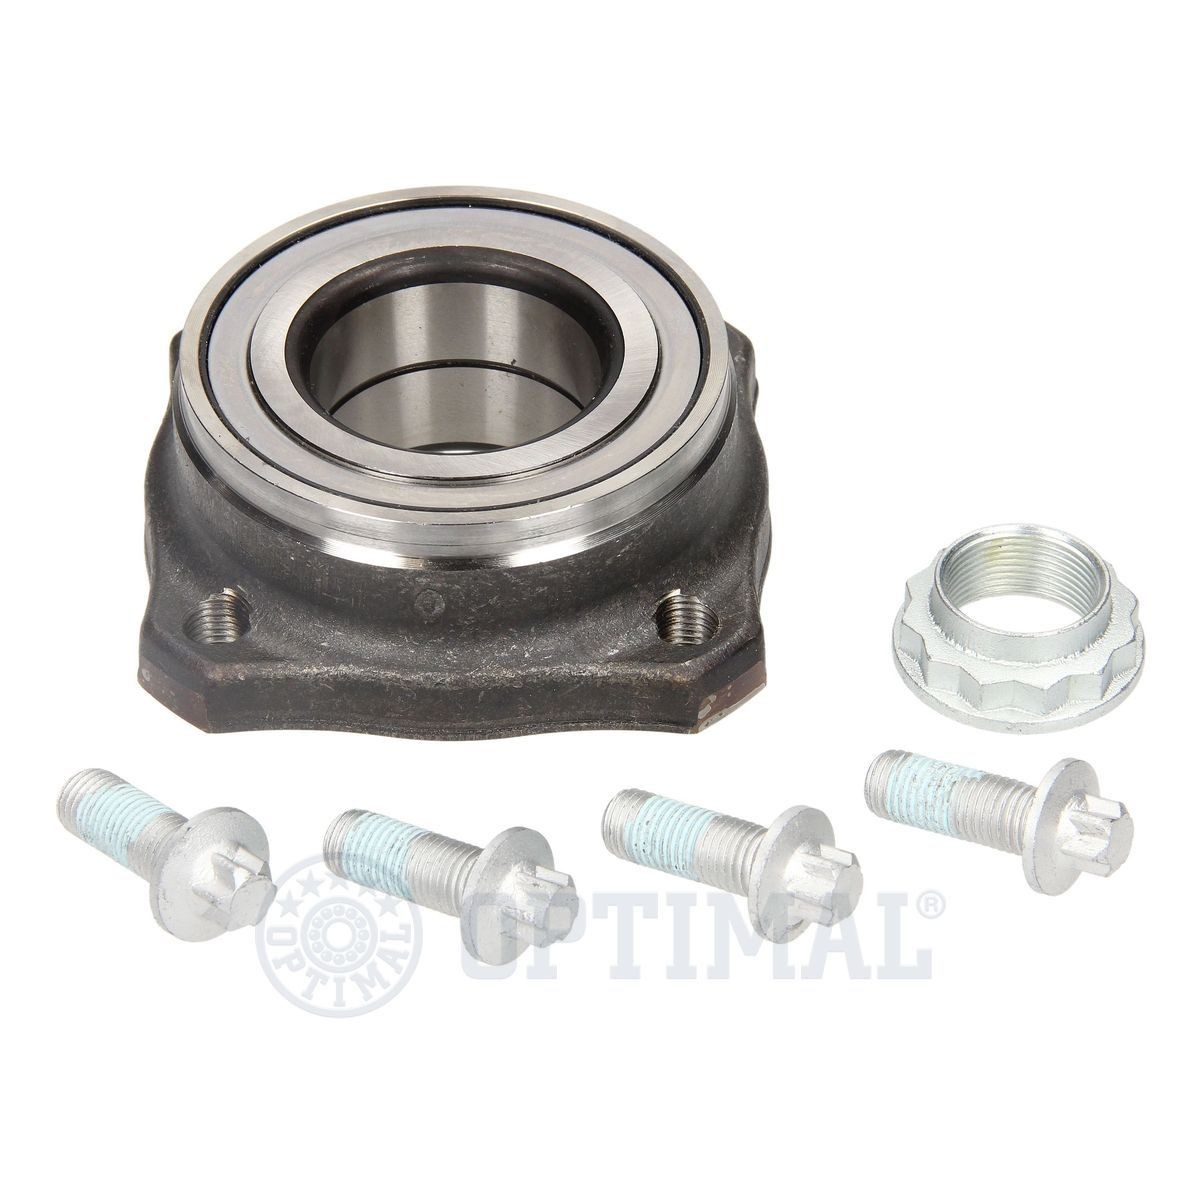 OPTIMAL 502504 Wheel bearing kit Rear Axle, 92 mm